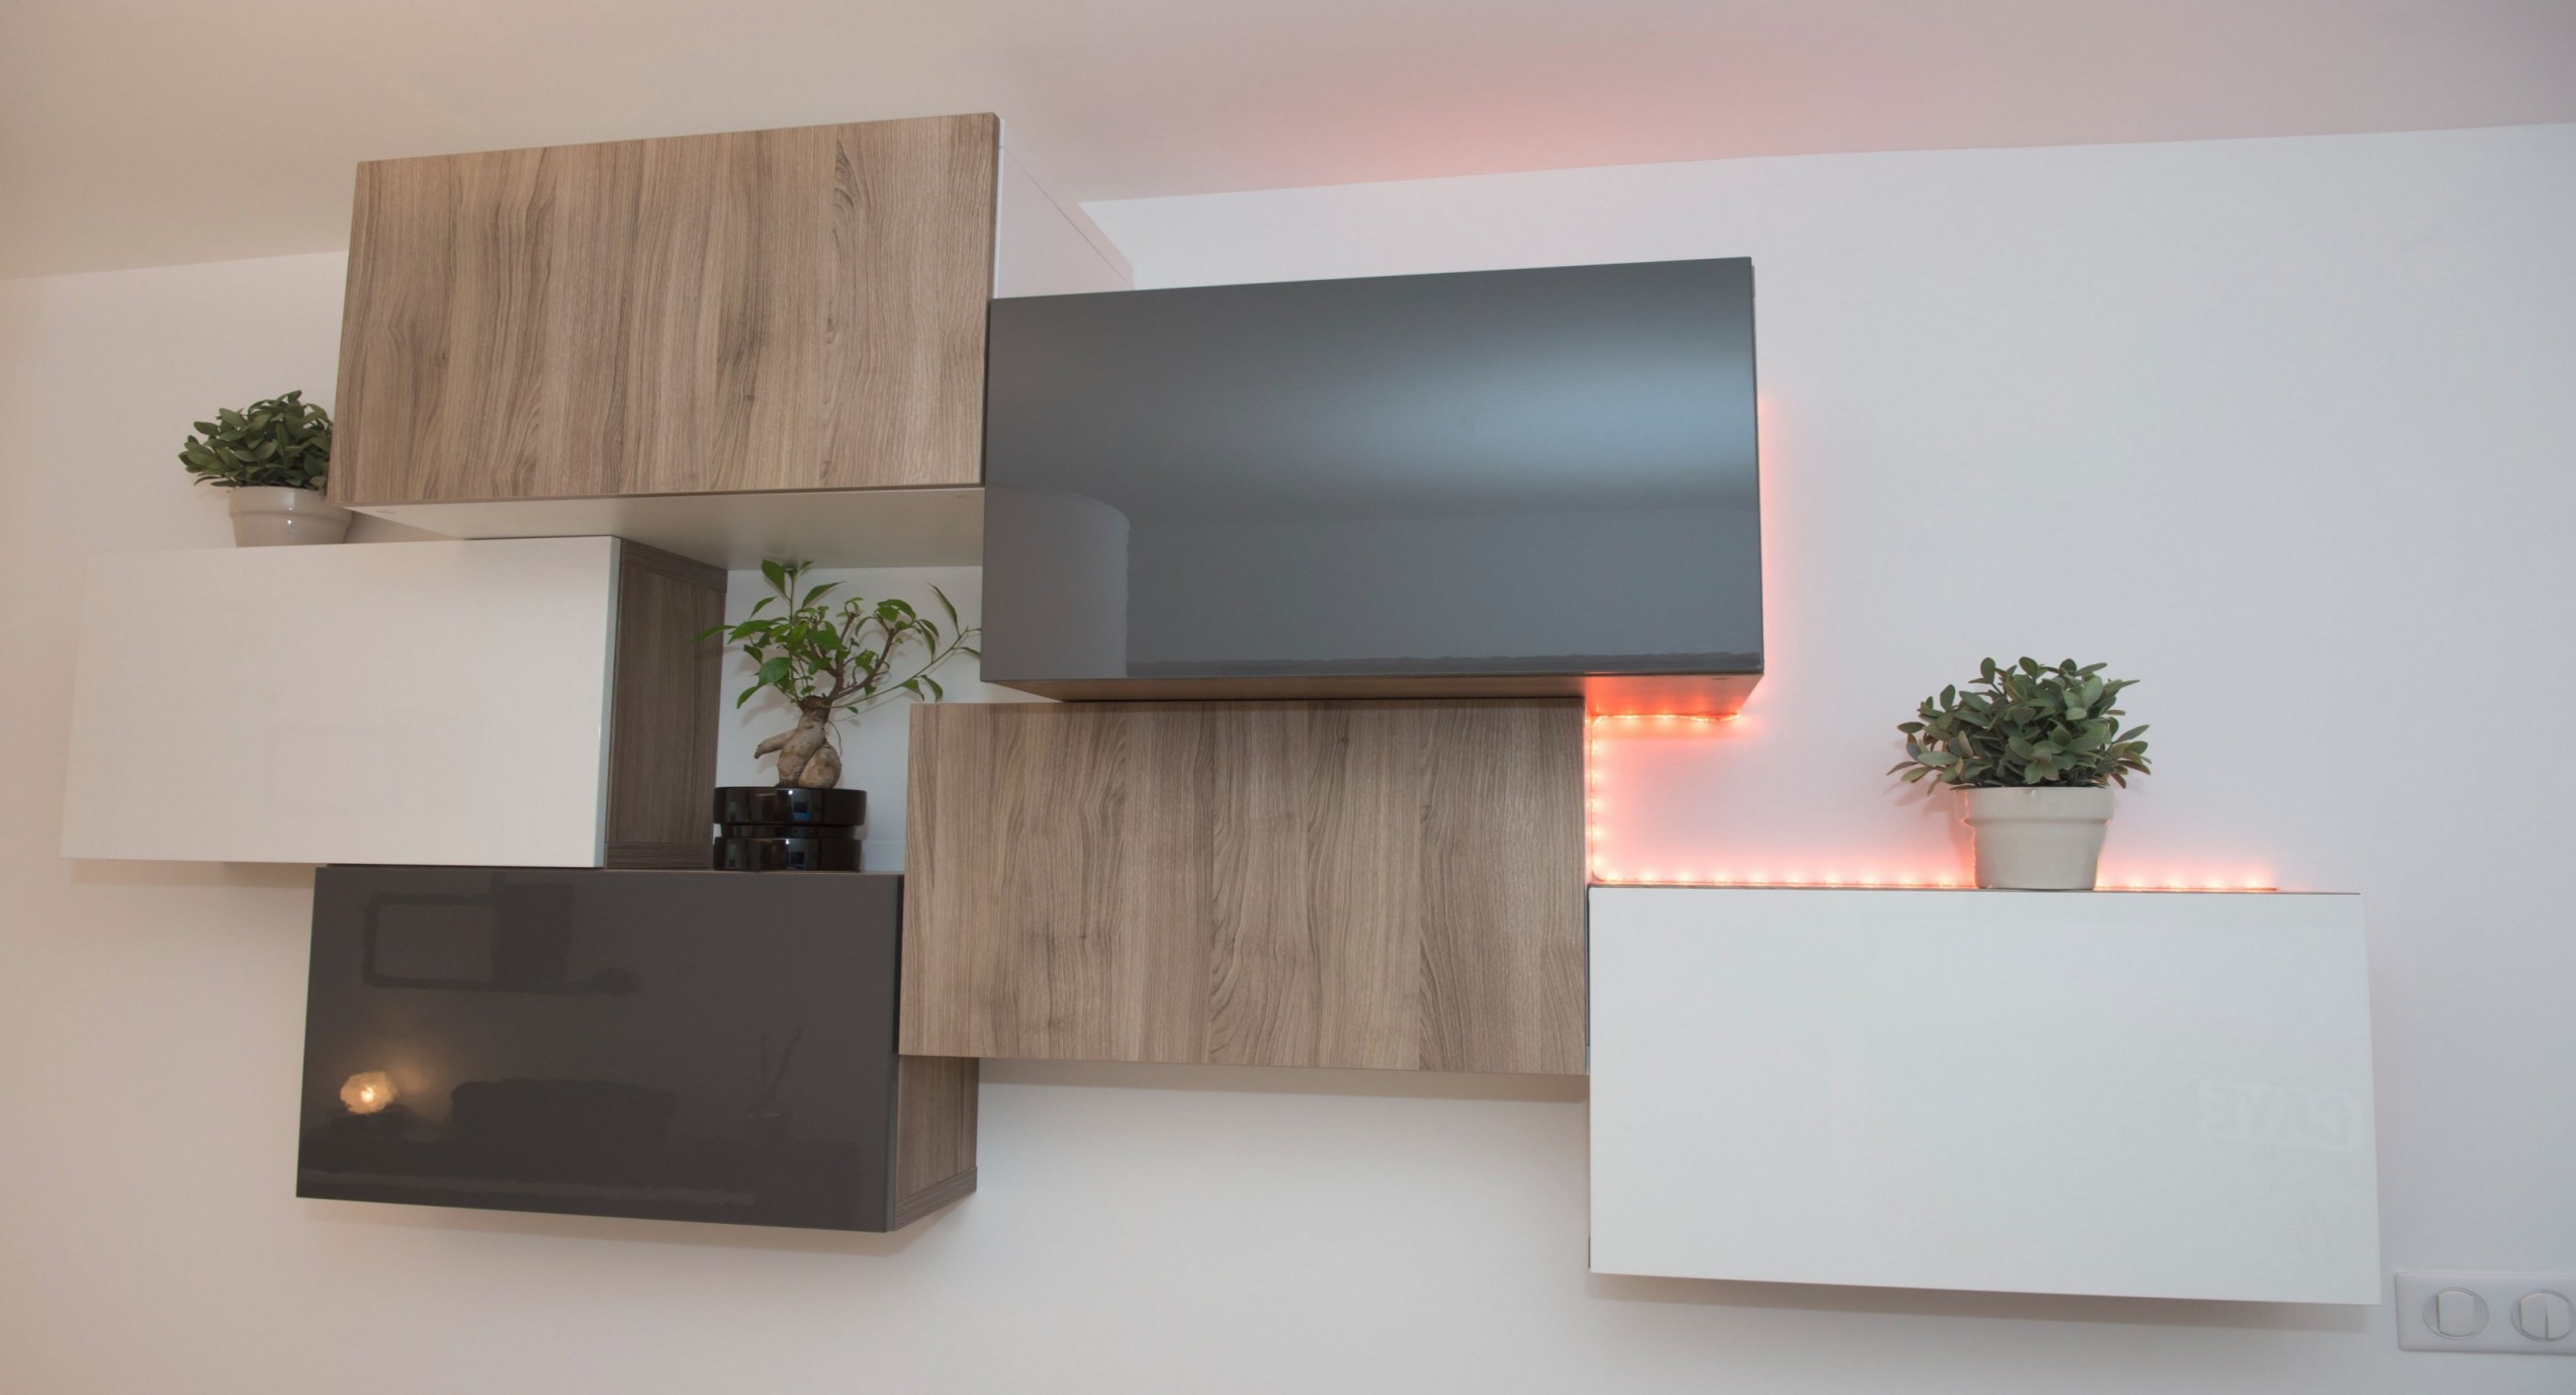 ikea furniture tv stand faux fireplace ideas tv console design minimaliste meuble tv of ikea furniture tv stand